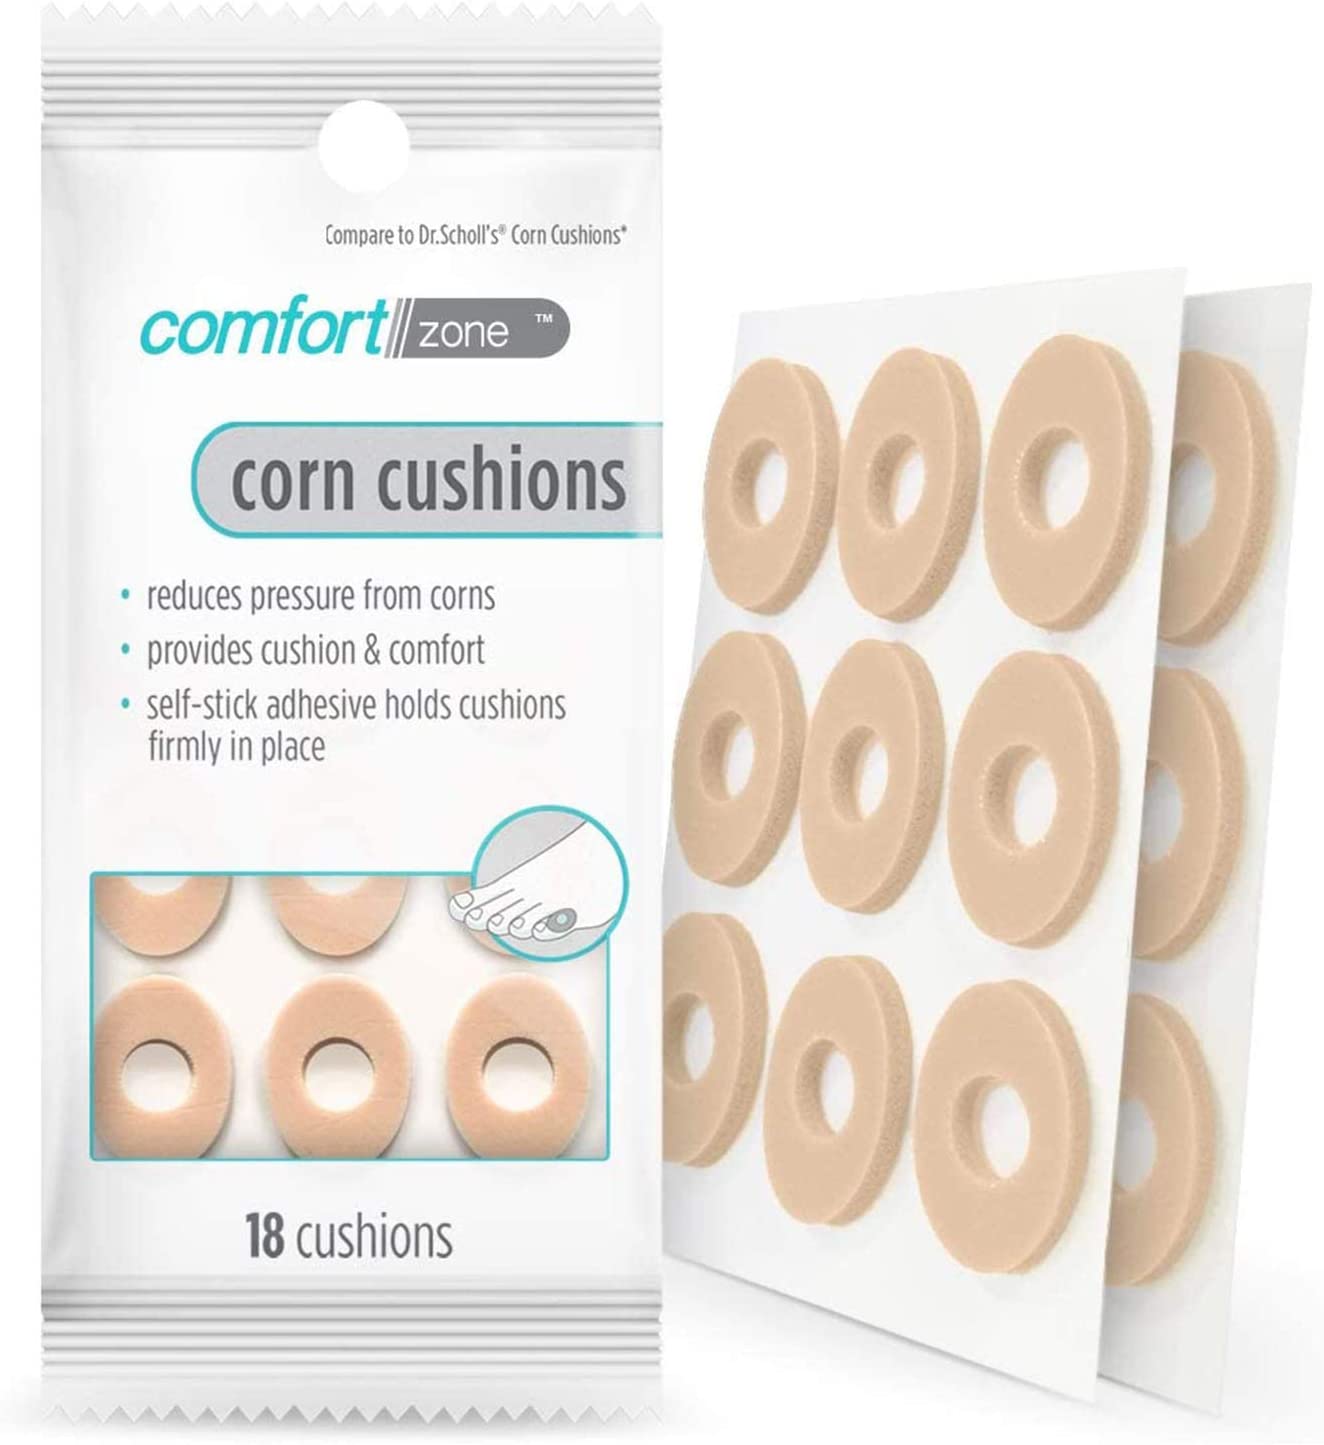 18-Ct Comfort Zone Self-Stick Adhesive Corn Cushions $0.86